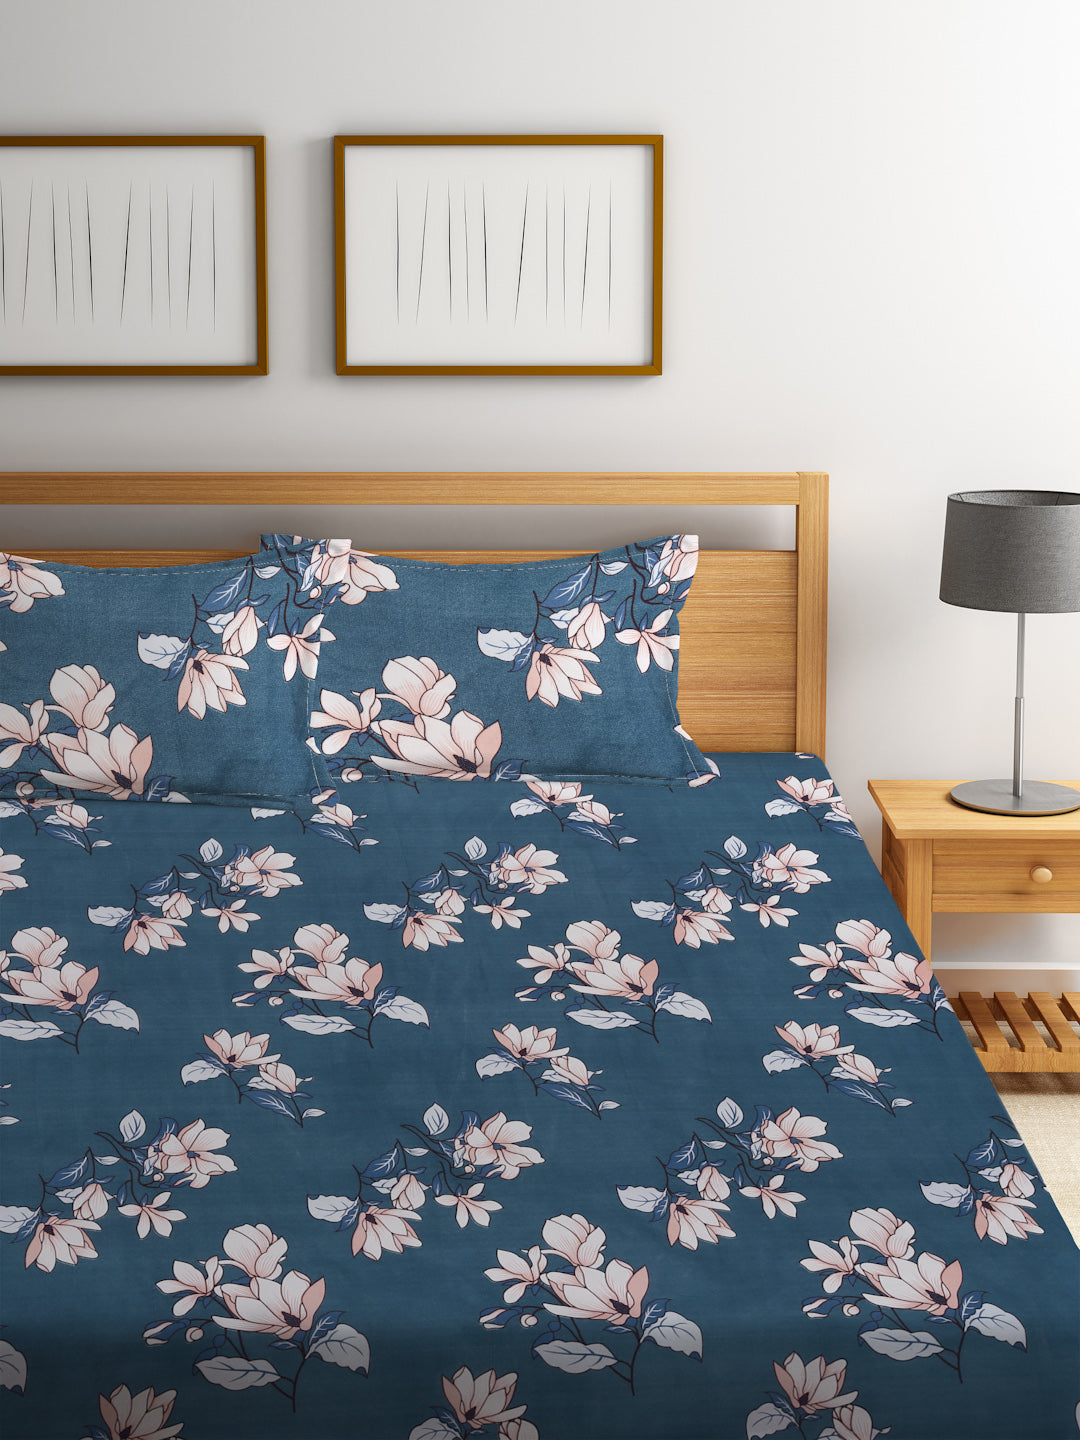 Klotthe Blue Floral 300 TC Cotton Blend Double Bedsheet Set in Book Fold Packing